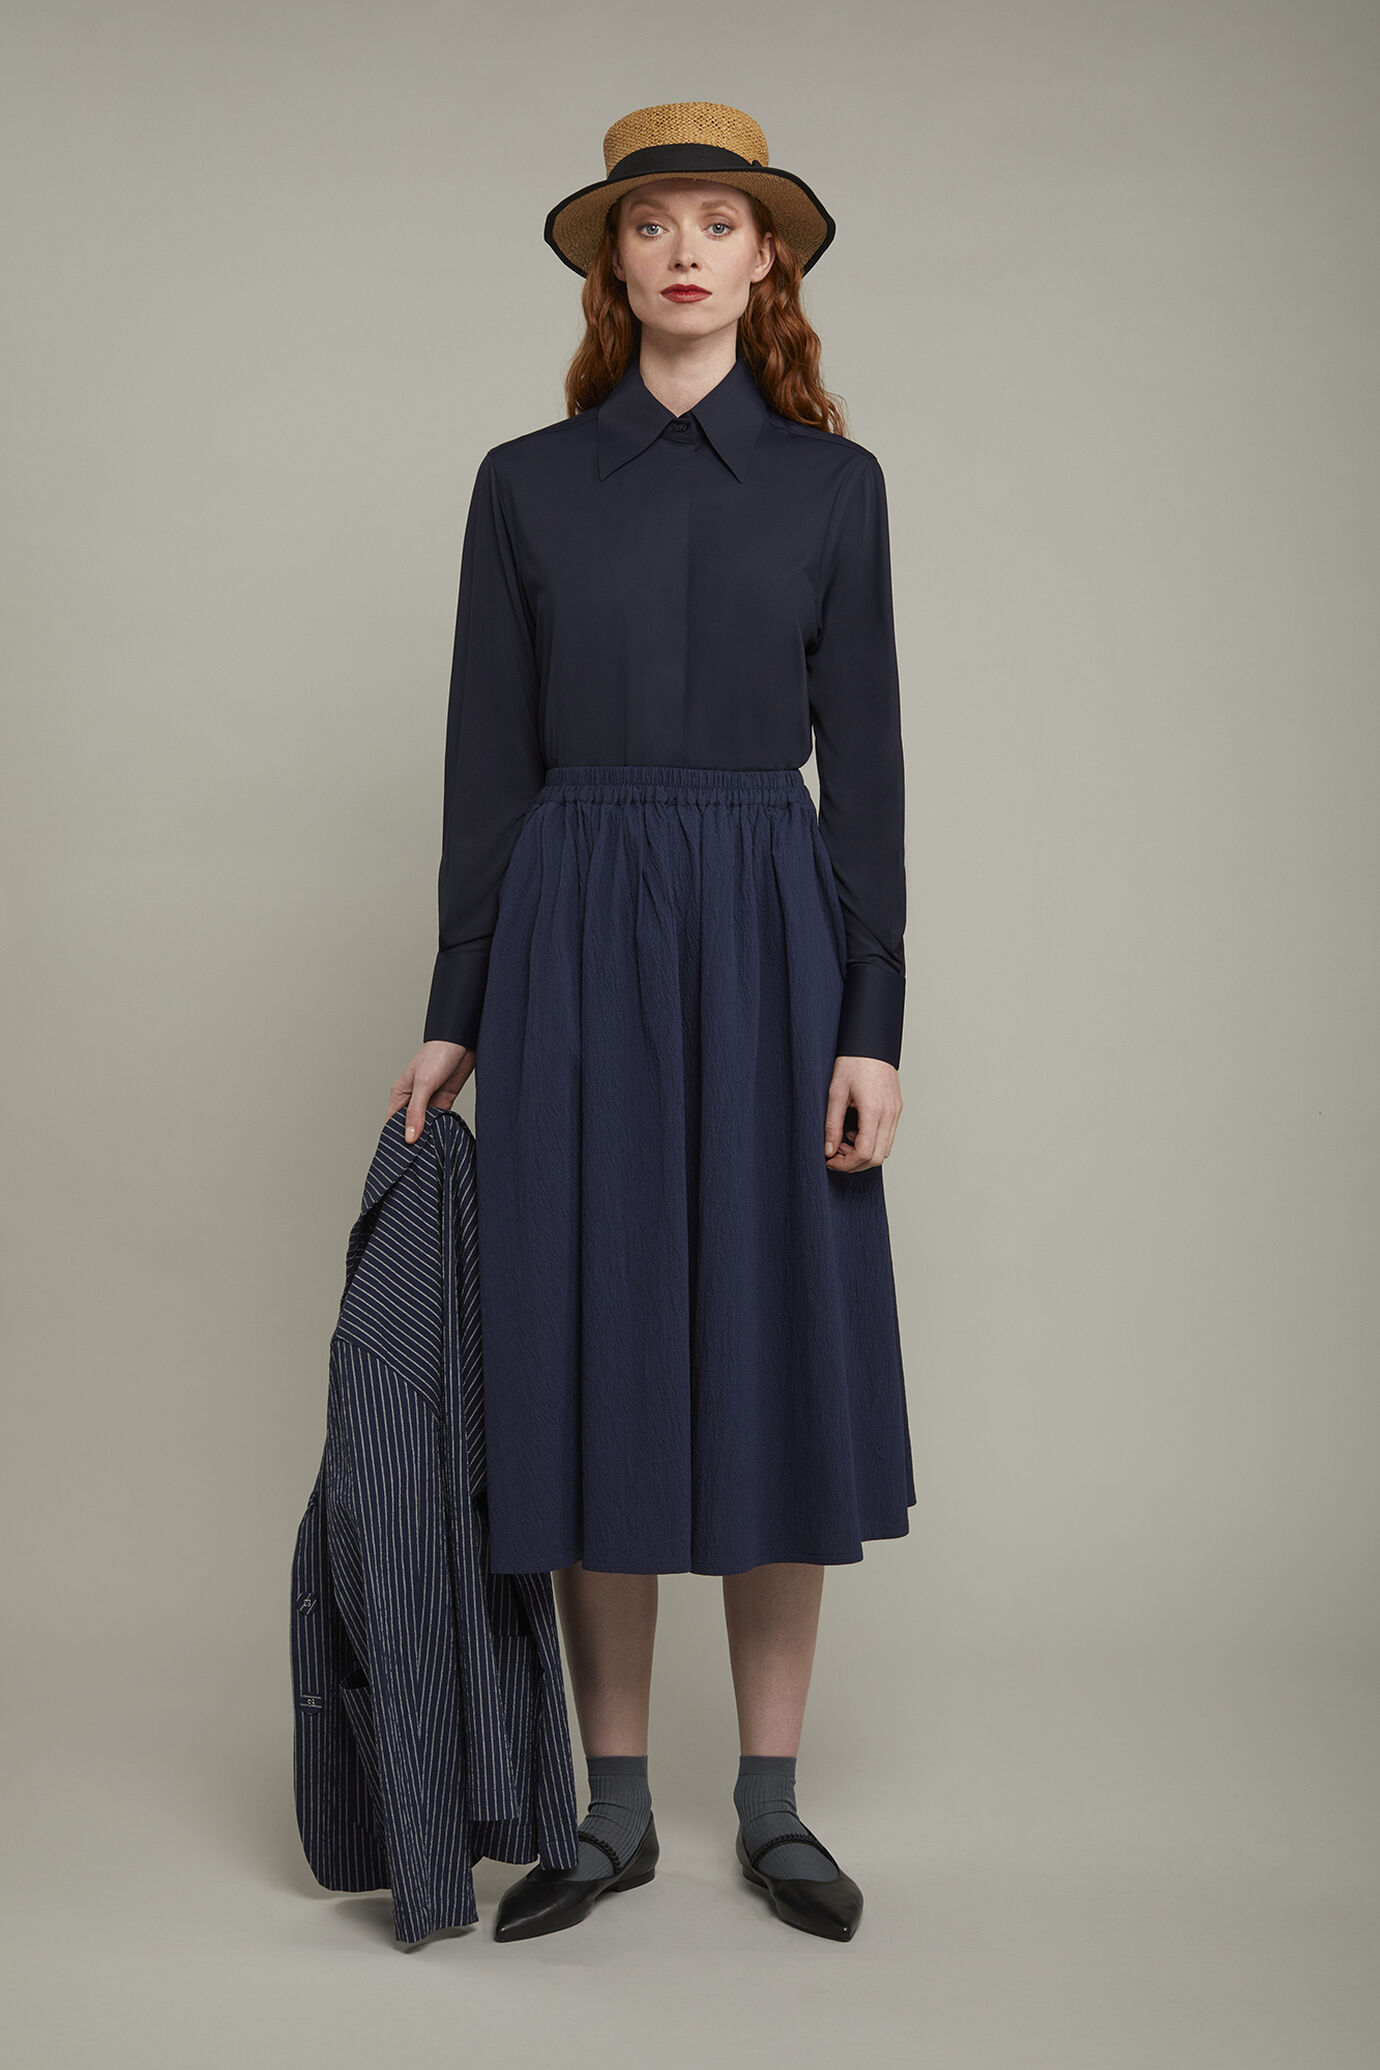 Women's solid color embossed cotton skirt regular fit